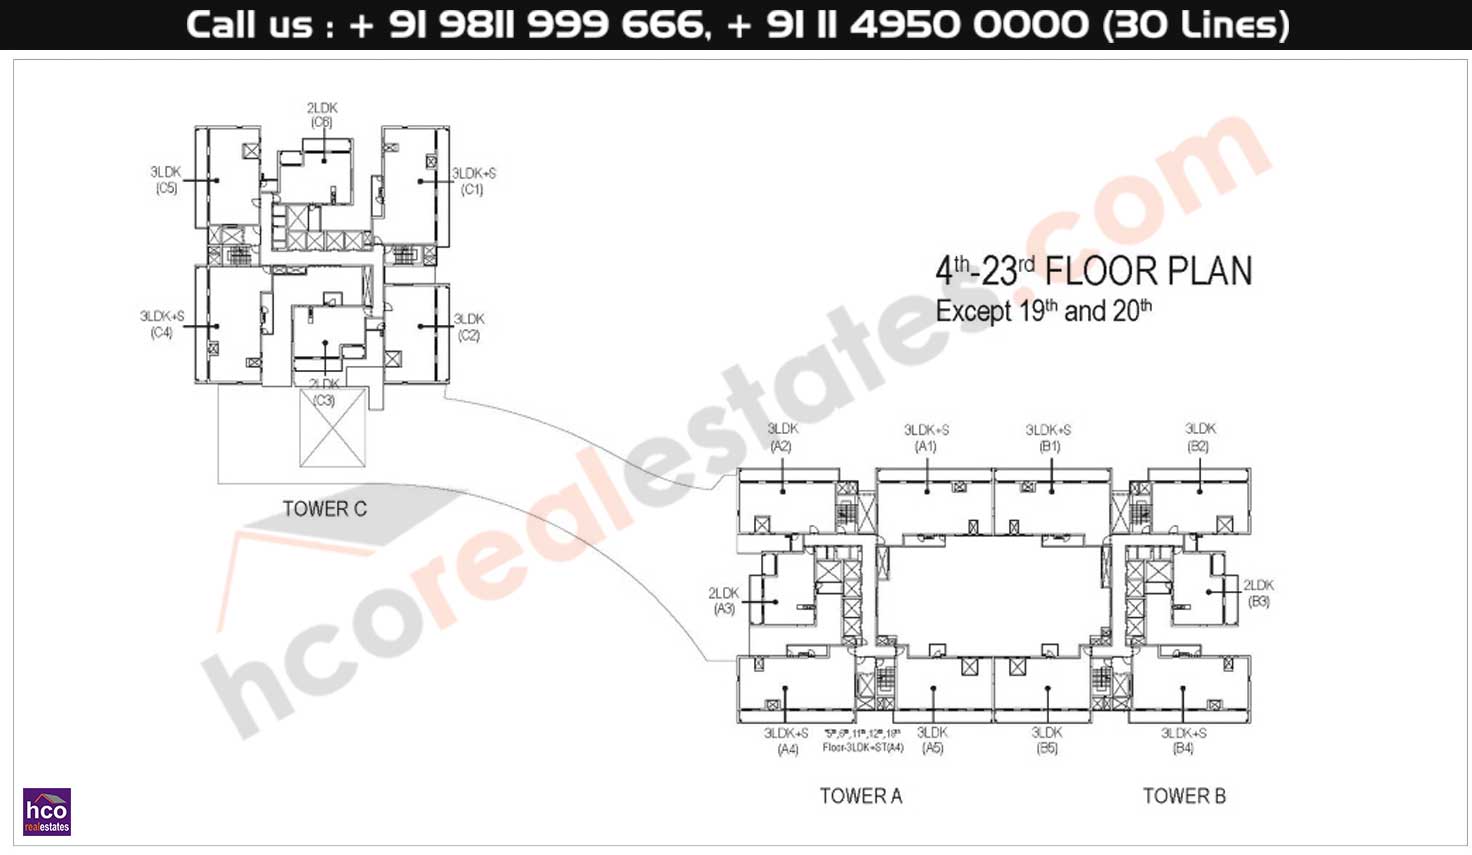 4th -23rd Floor Plan